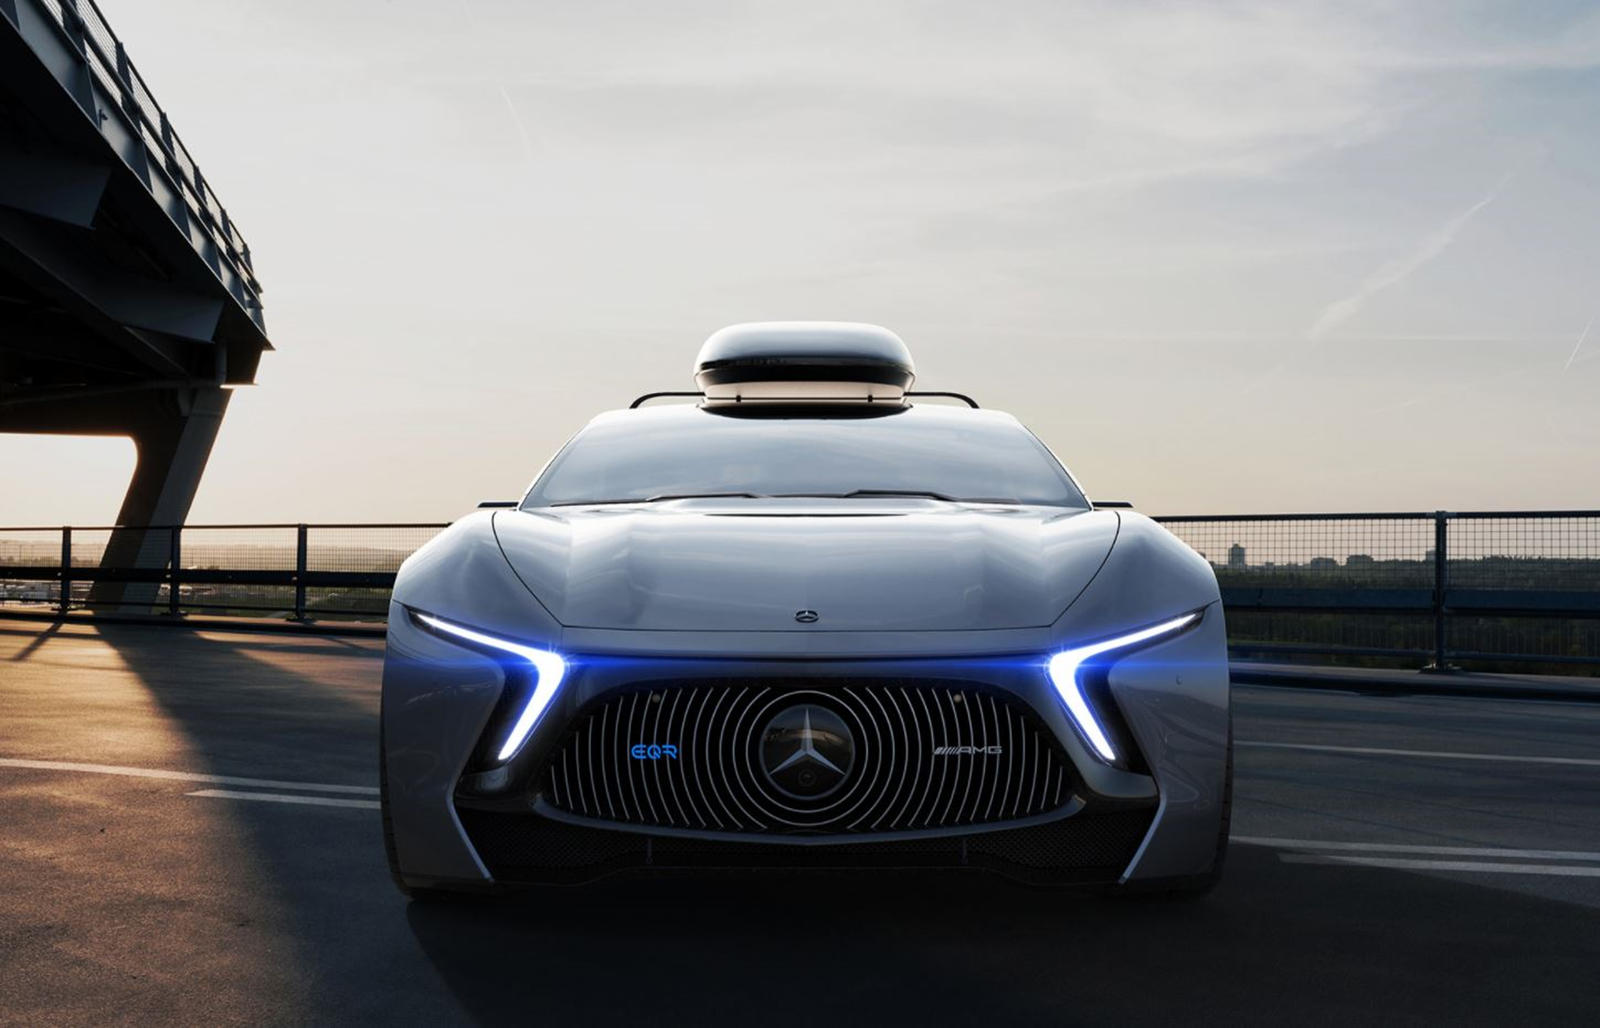 Mercedes electric hypercar